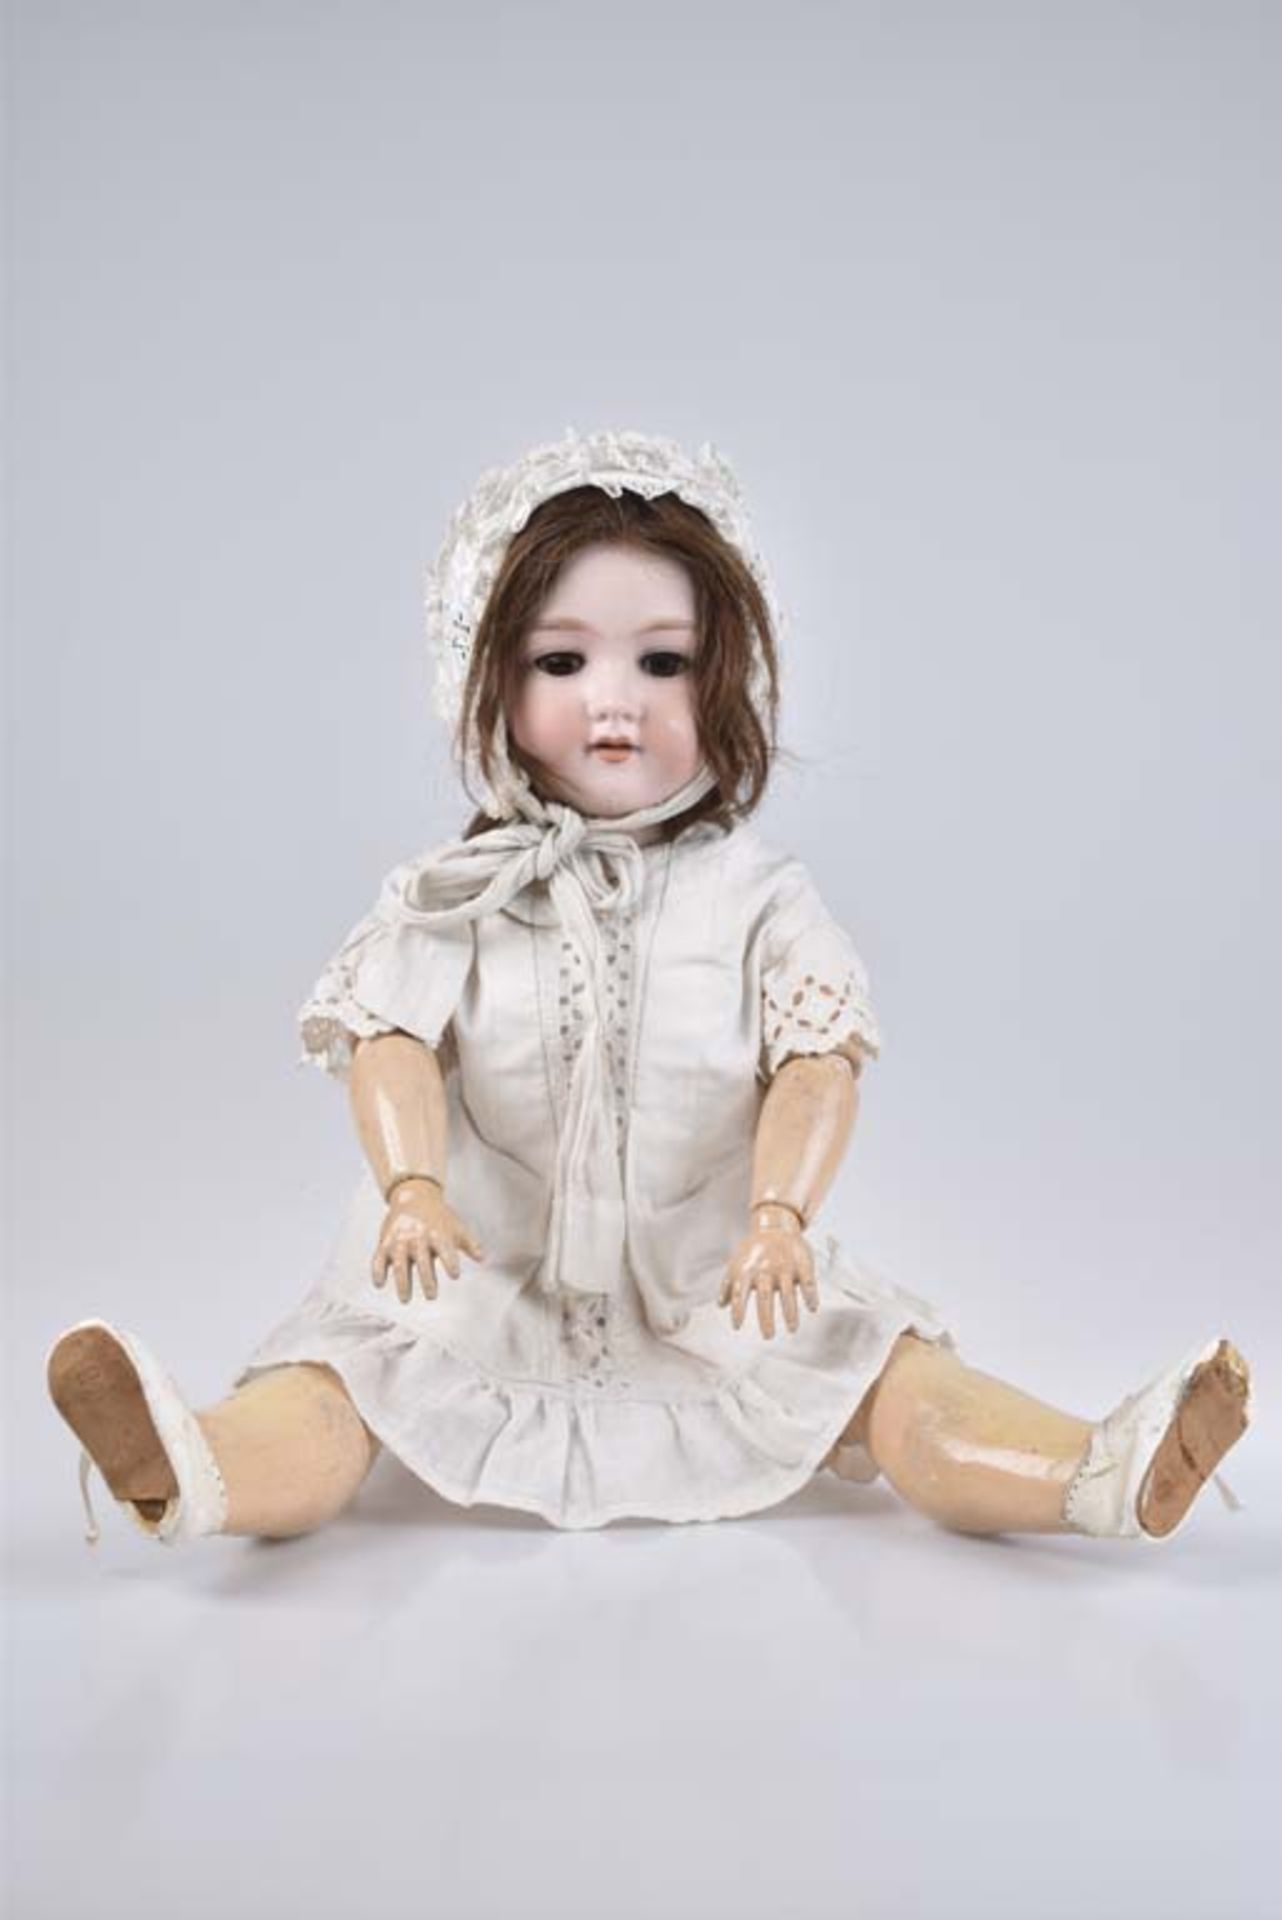 ARMAND MARSEILLE Puppe Bisquitporzellan, gem. Made in Germany 390n DRGM 246/ 1 A 11 M,